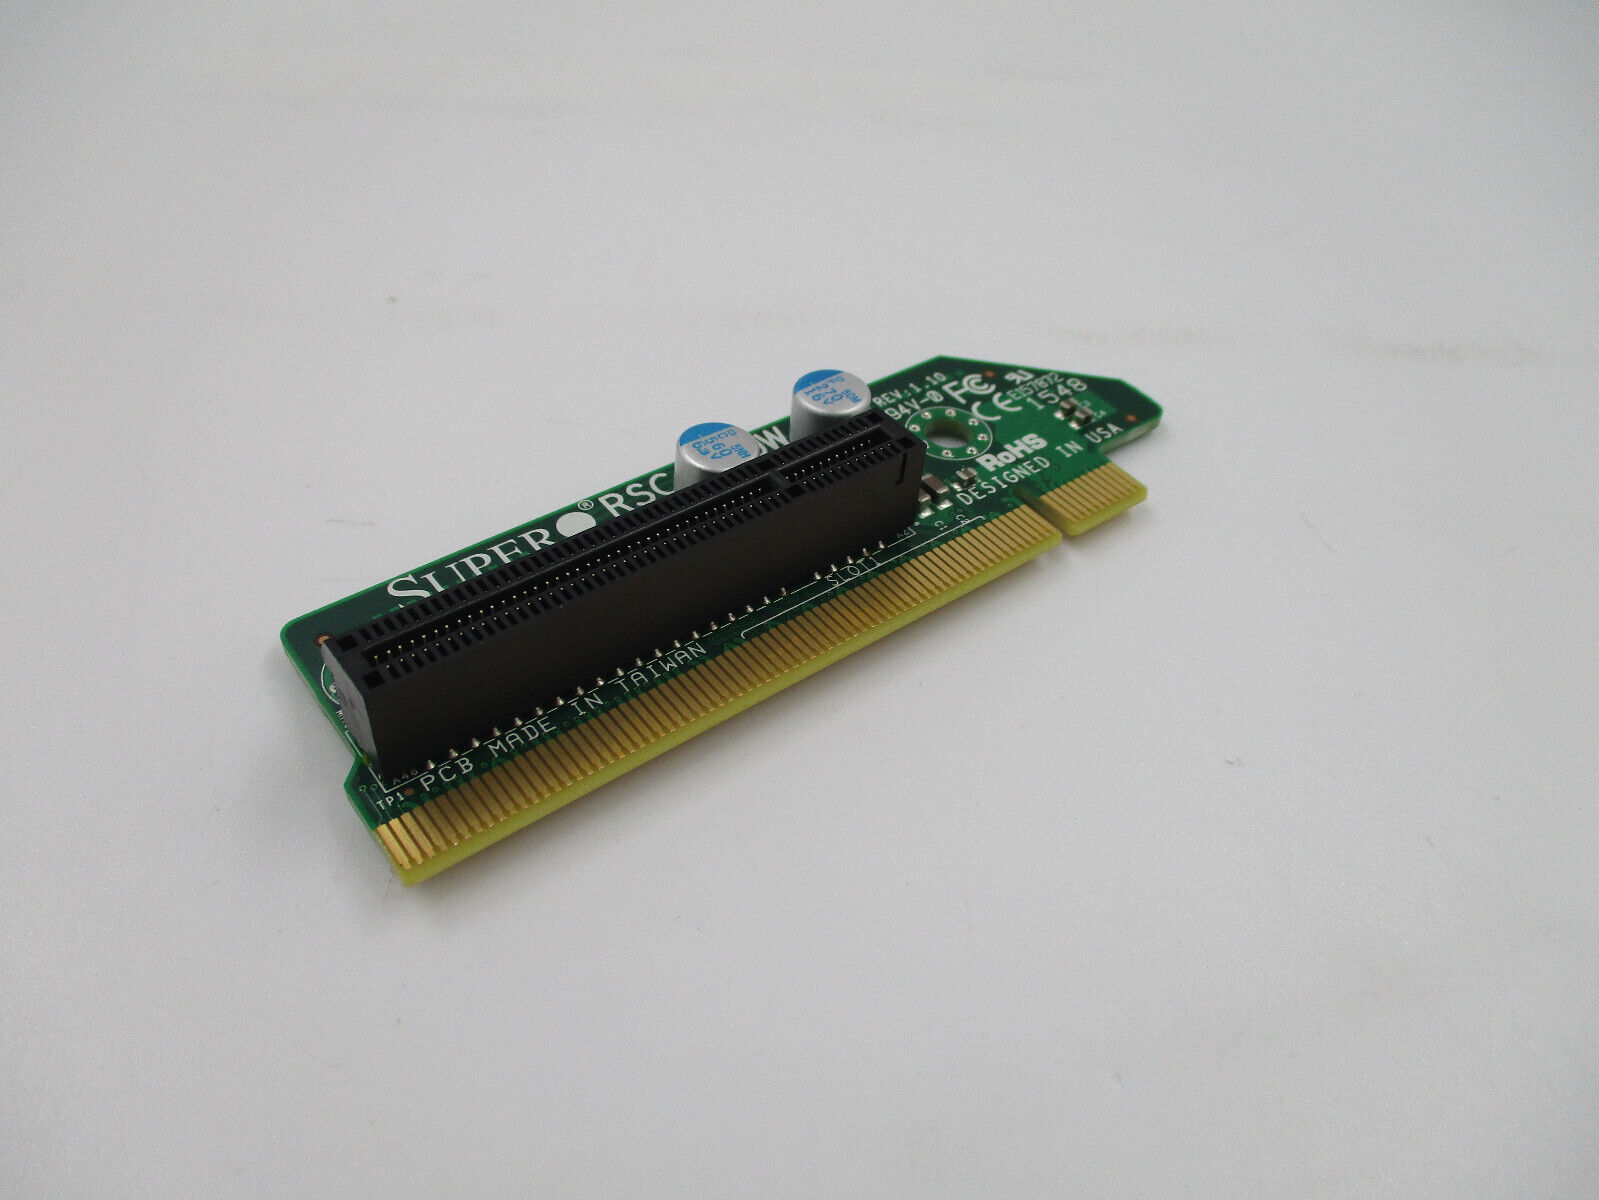 Supermicro 1U Rhs PCI-E x8 Riser Card PN: RSC-R1UW-E8R Tested Working